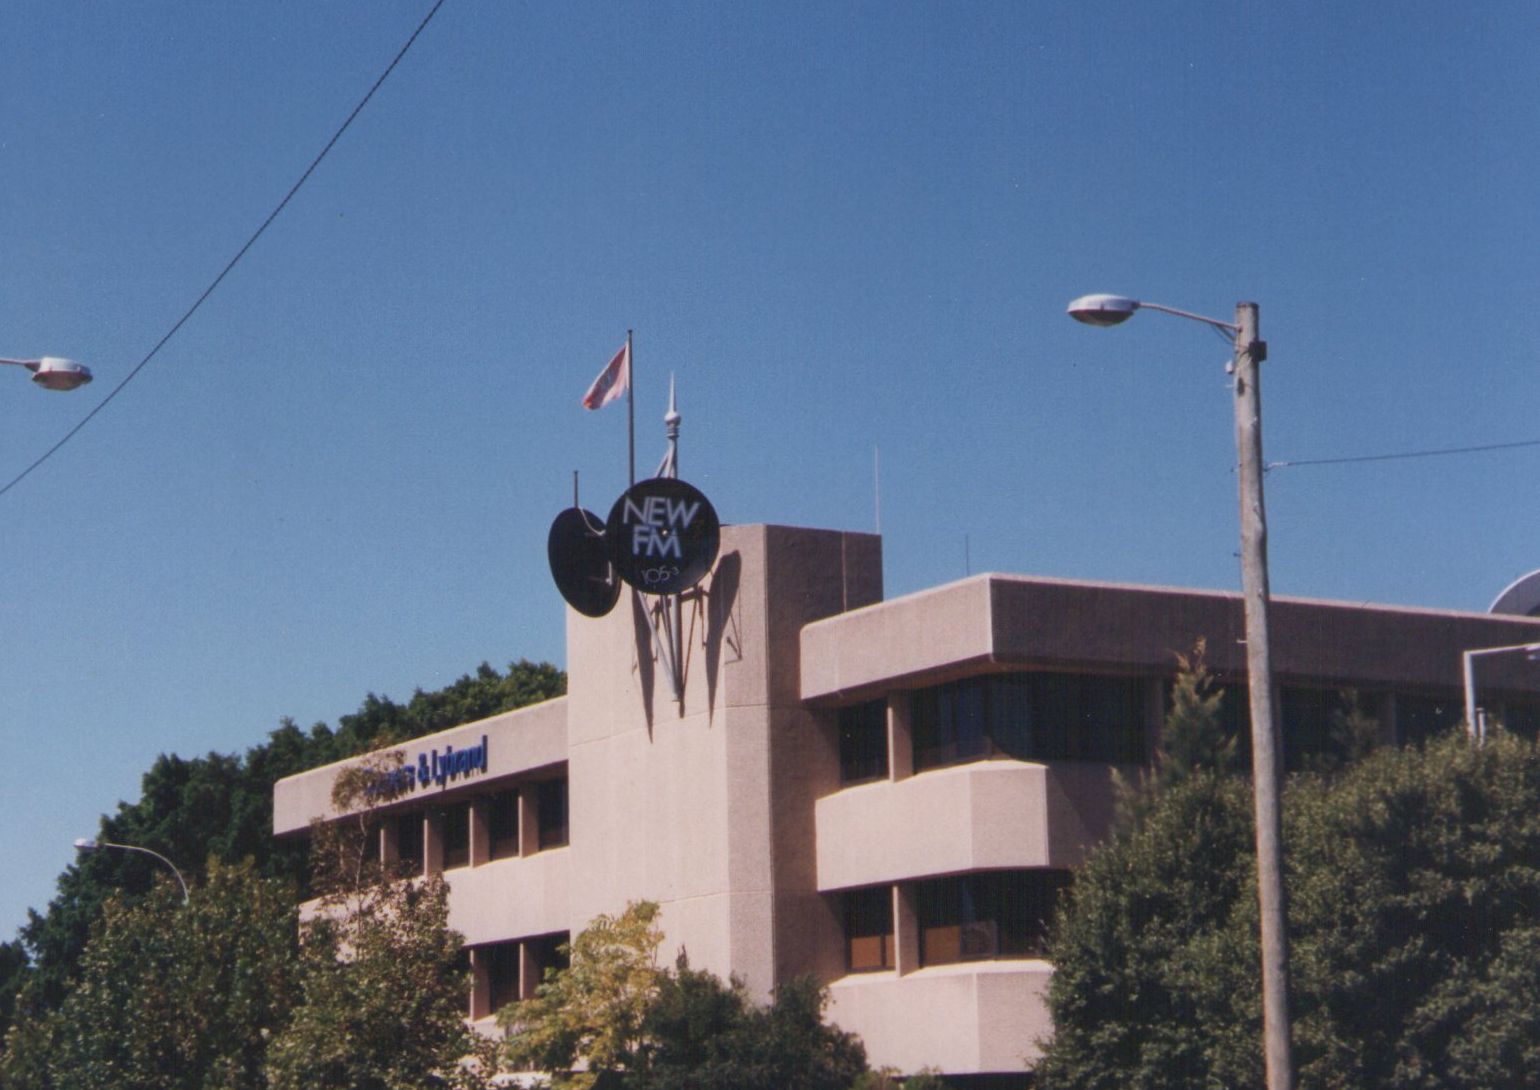 NEW FM studios 1990